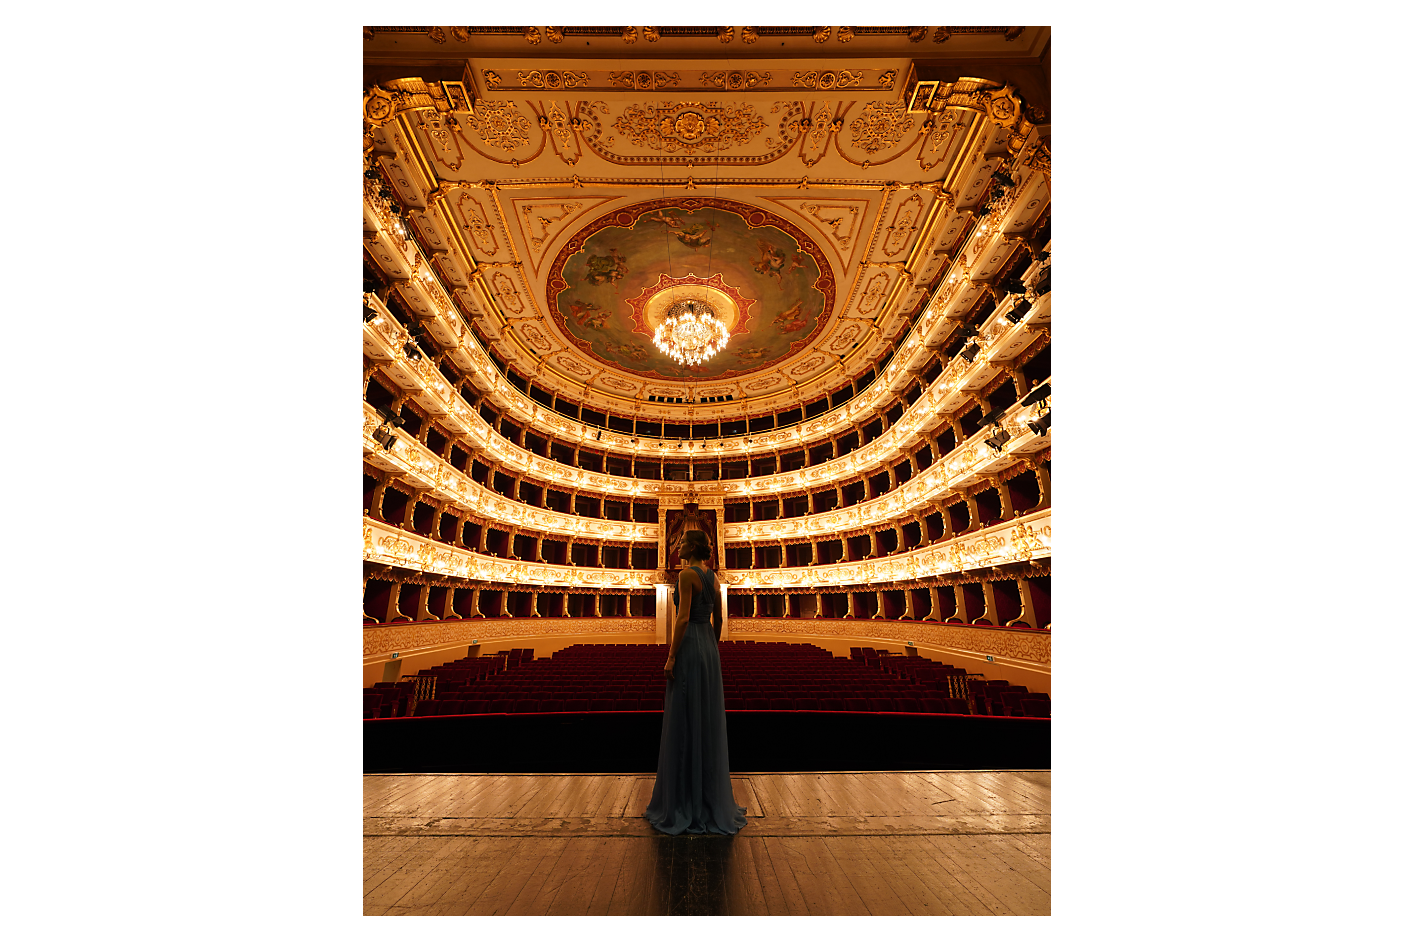 Perempuan mengenakan gaun panjang berwarna biru berdiri di atas panggung di hadapan teater kosong.